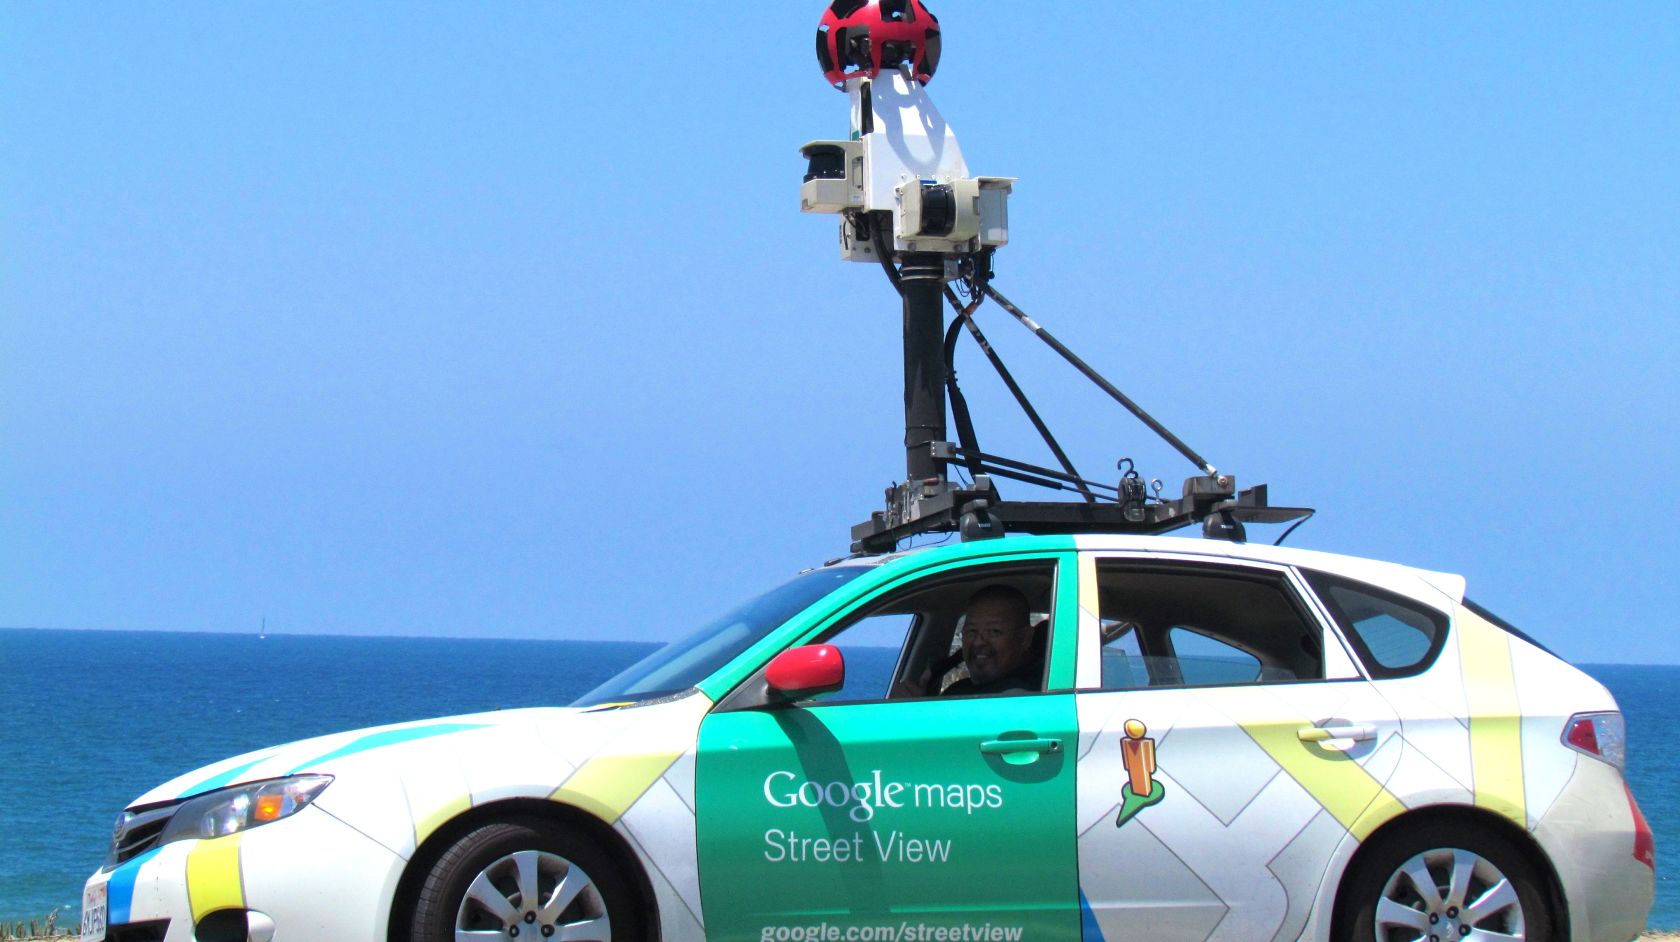 Google street view virtual tours